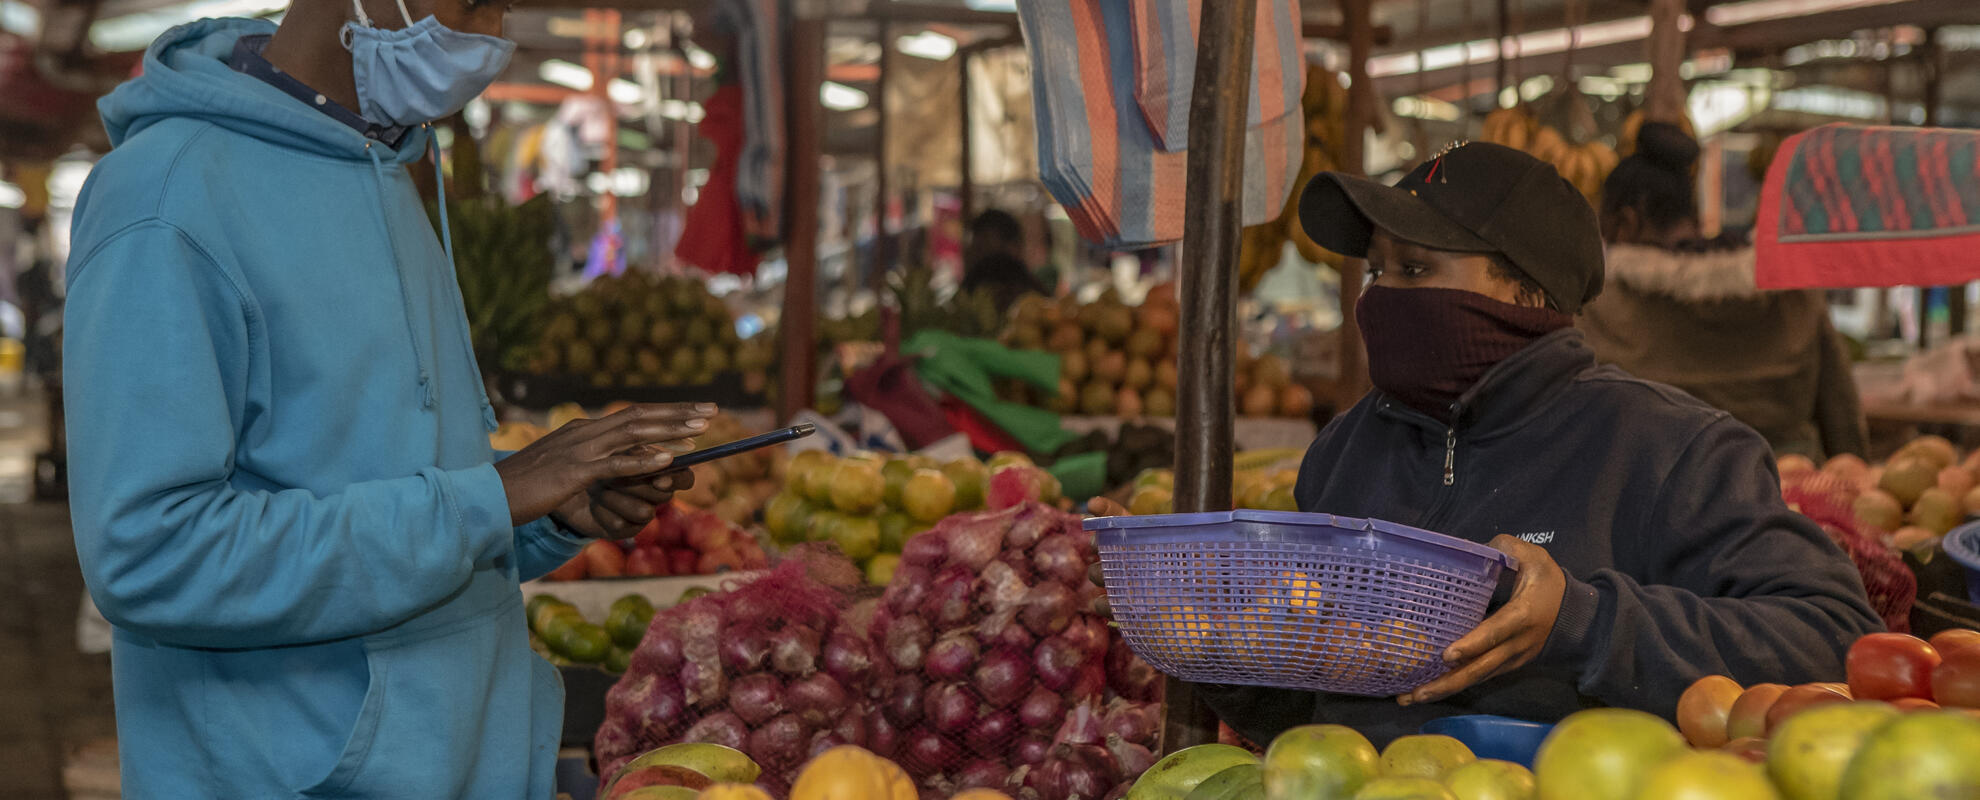 Market place in Kenya